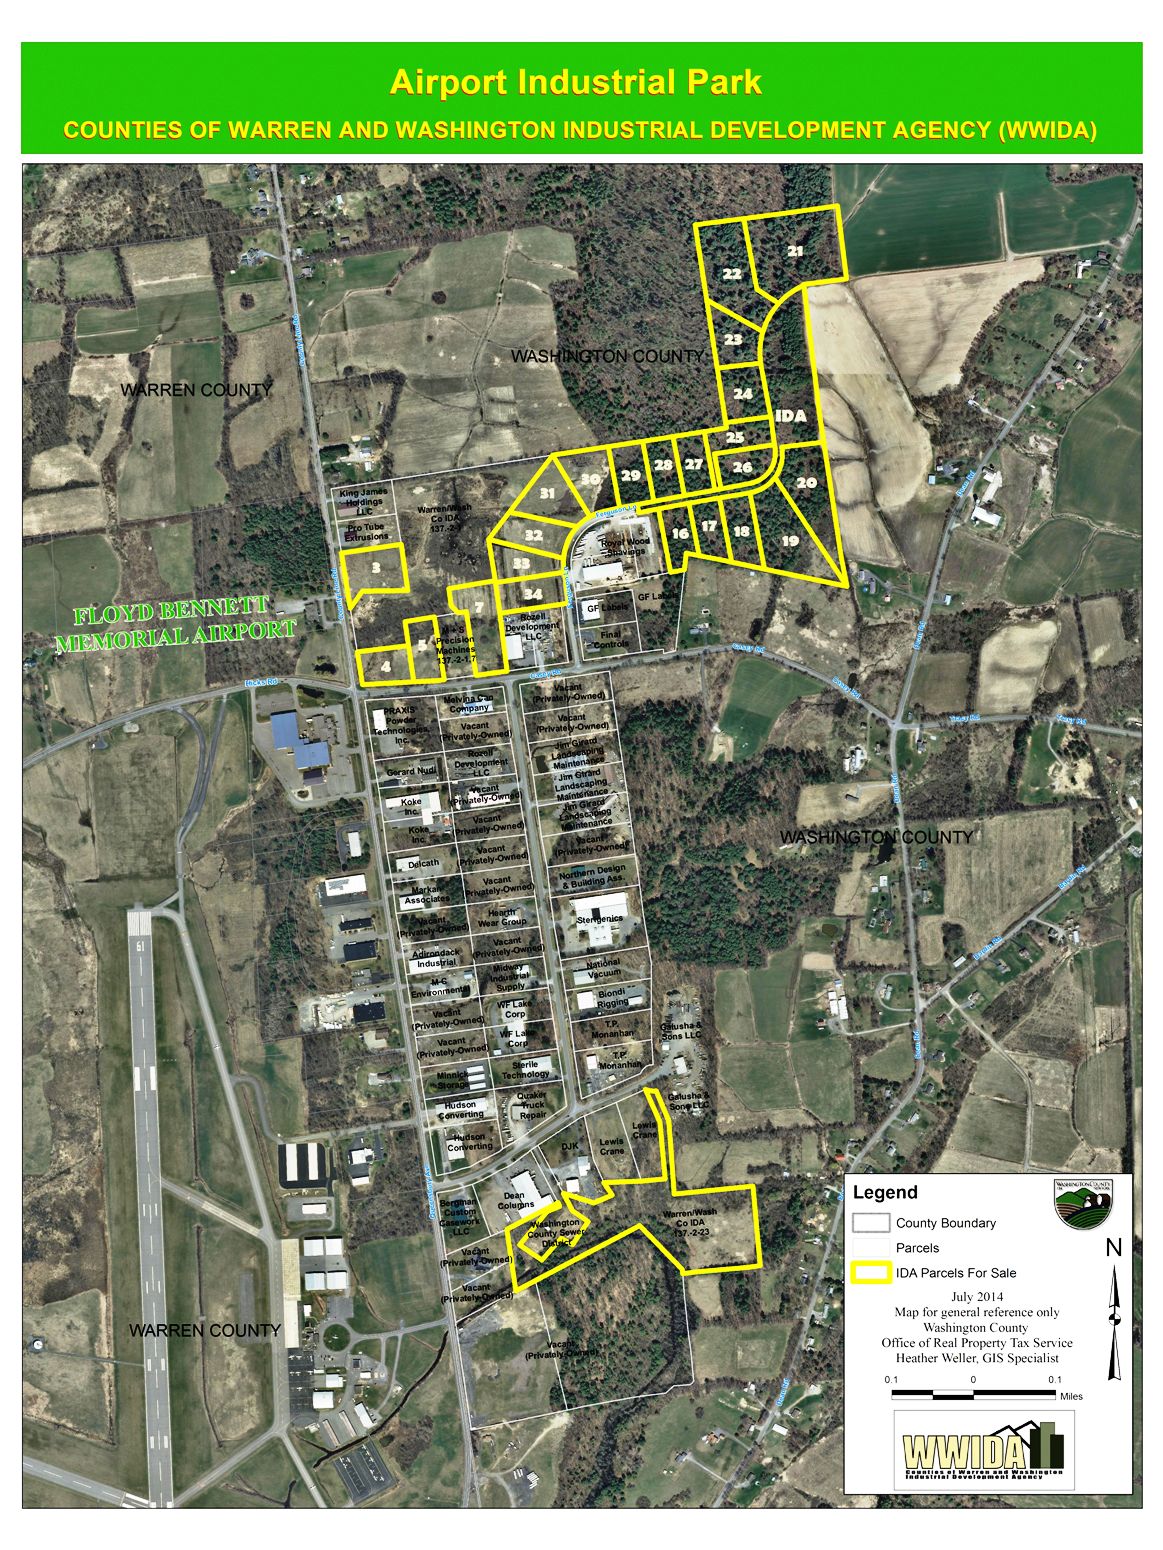 Airport Industrial Park Properties Map